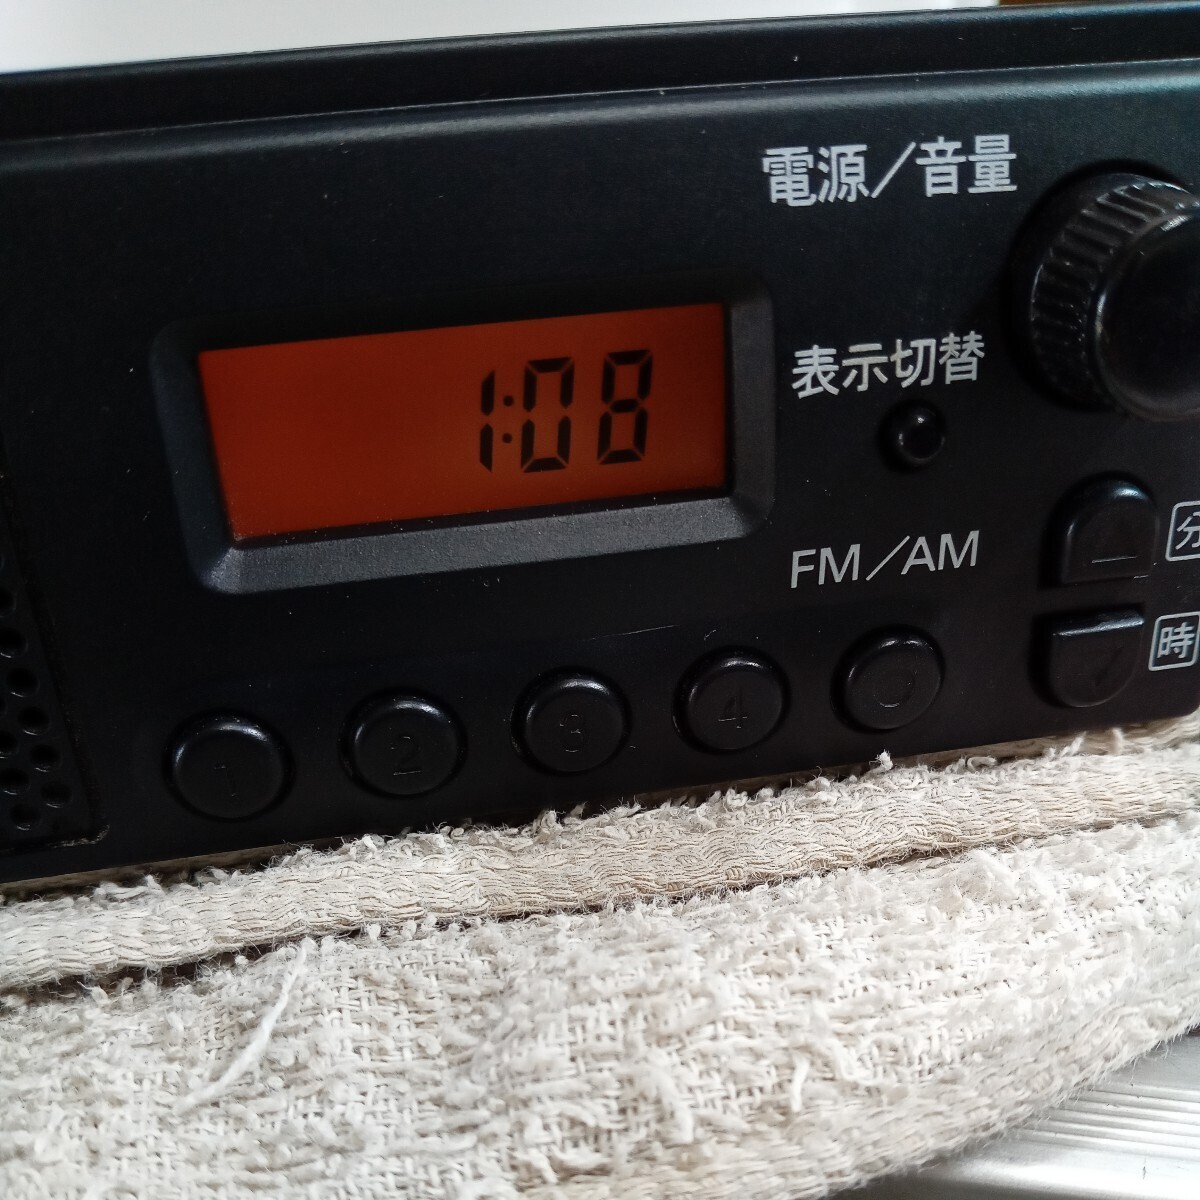 SUZUKI/スズキ純正 1DIN スピーカー内蔵 FM/AM ラジオ SANYO/サンヨー 39101-68H20-000 F-3865Bの画像2